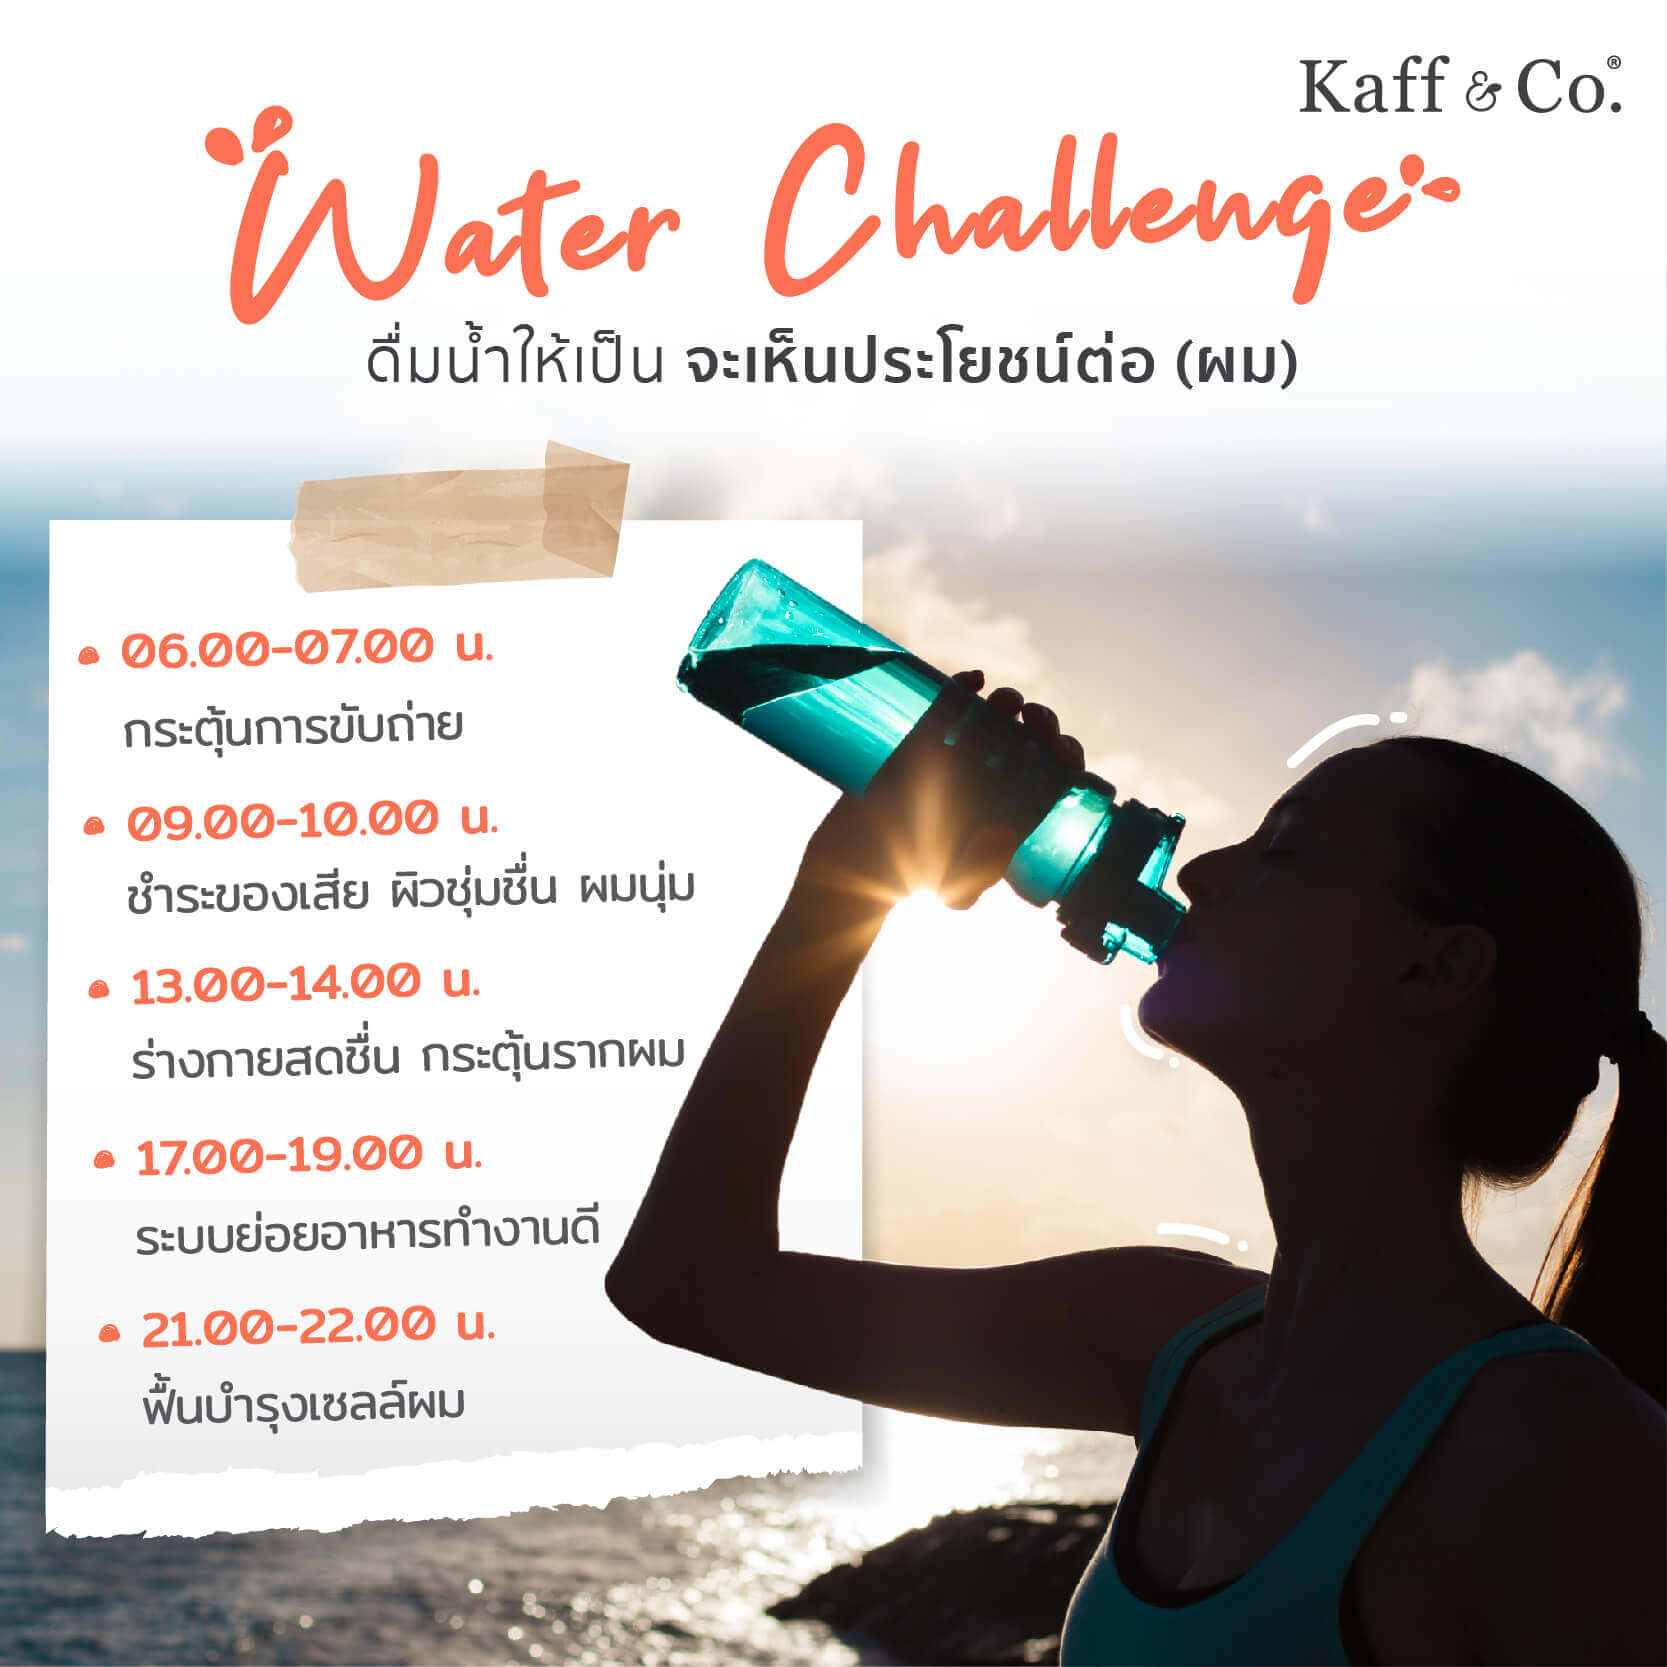 Water Challenge ดื่มน้ำให้เป็นจะเห็นประโยชน์ต่อ(ผม)